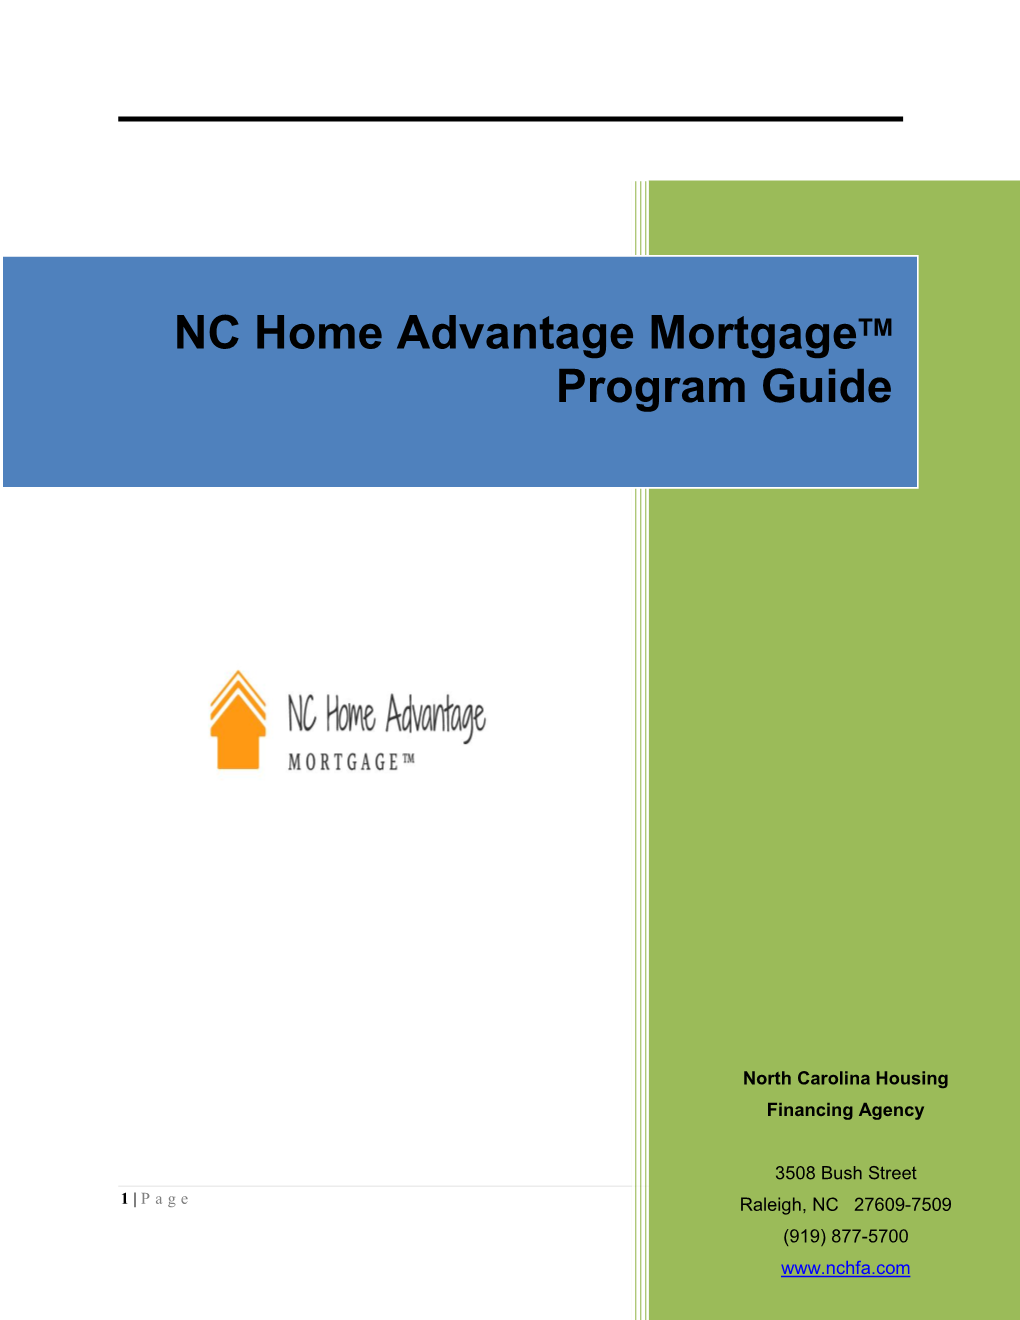 NC Home Advantage Mortgagetm Program Guide